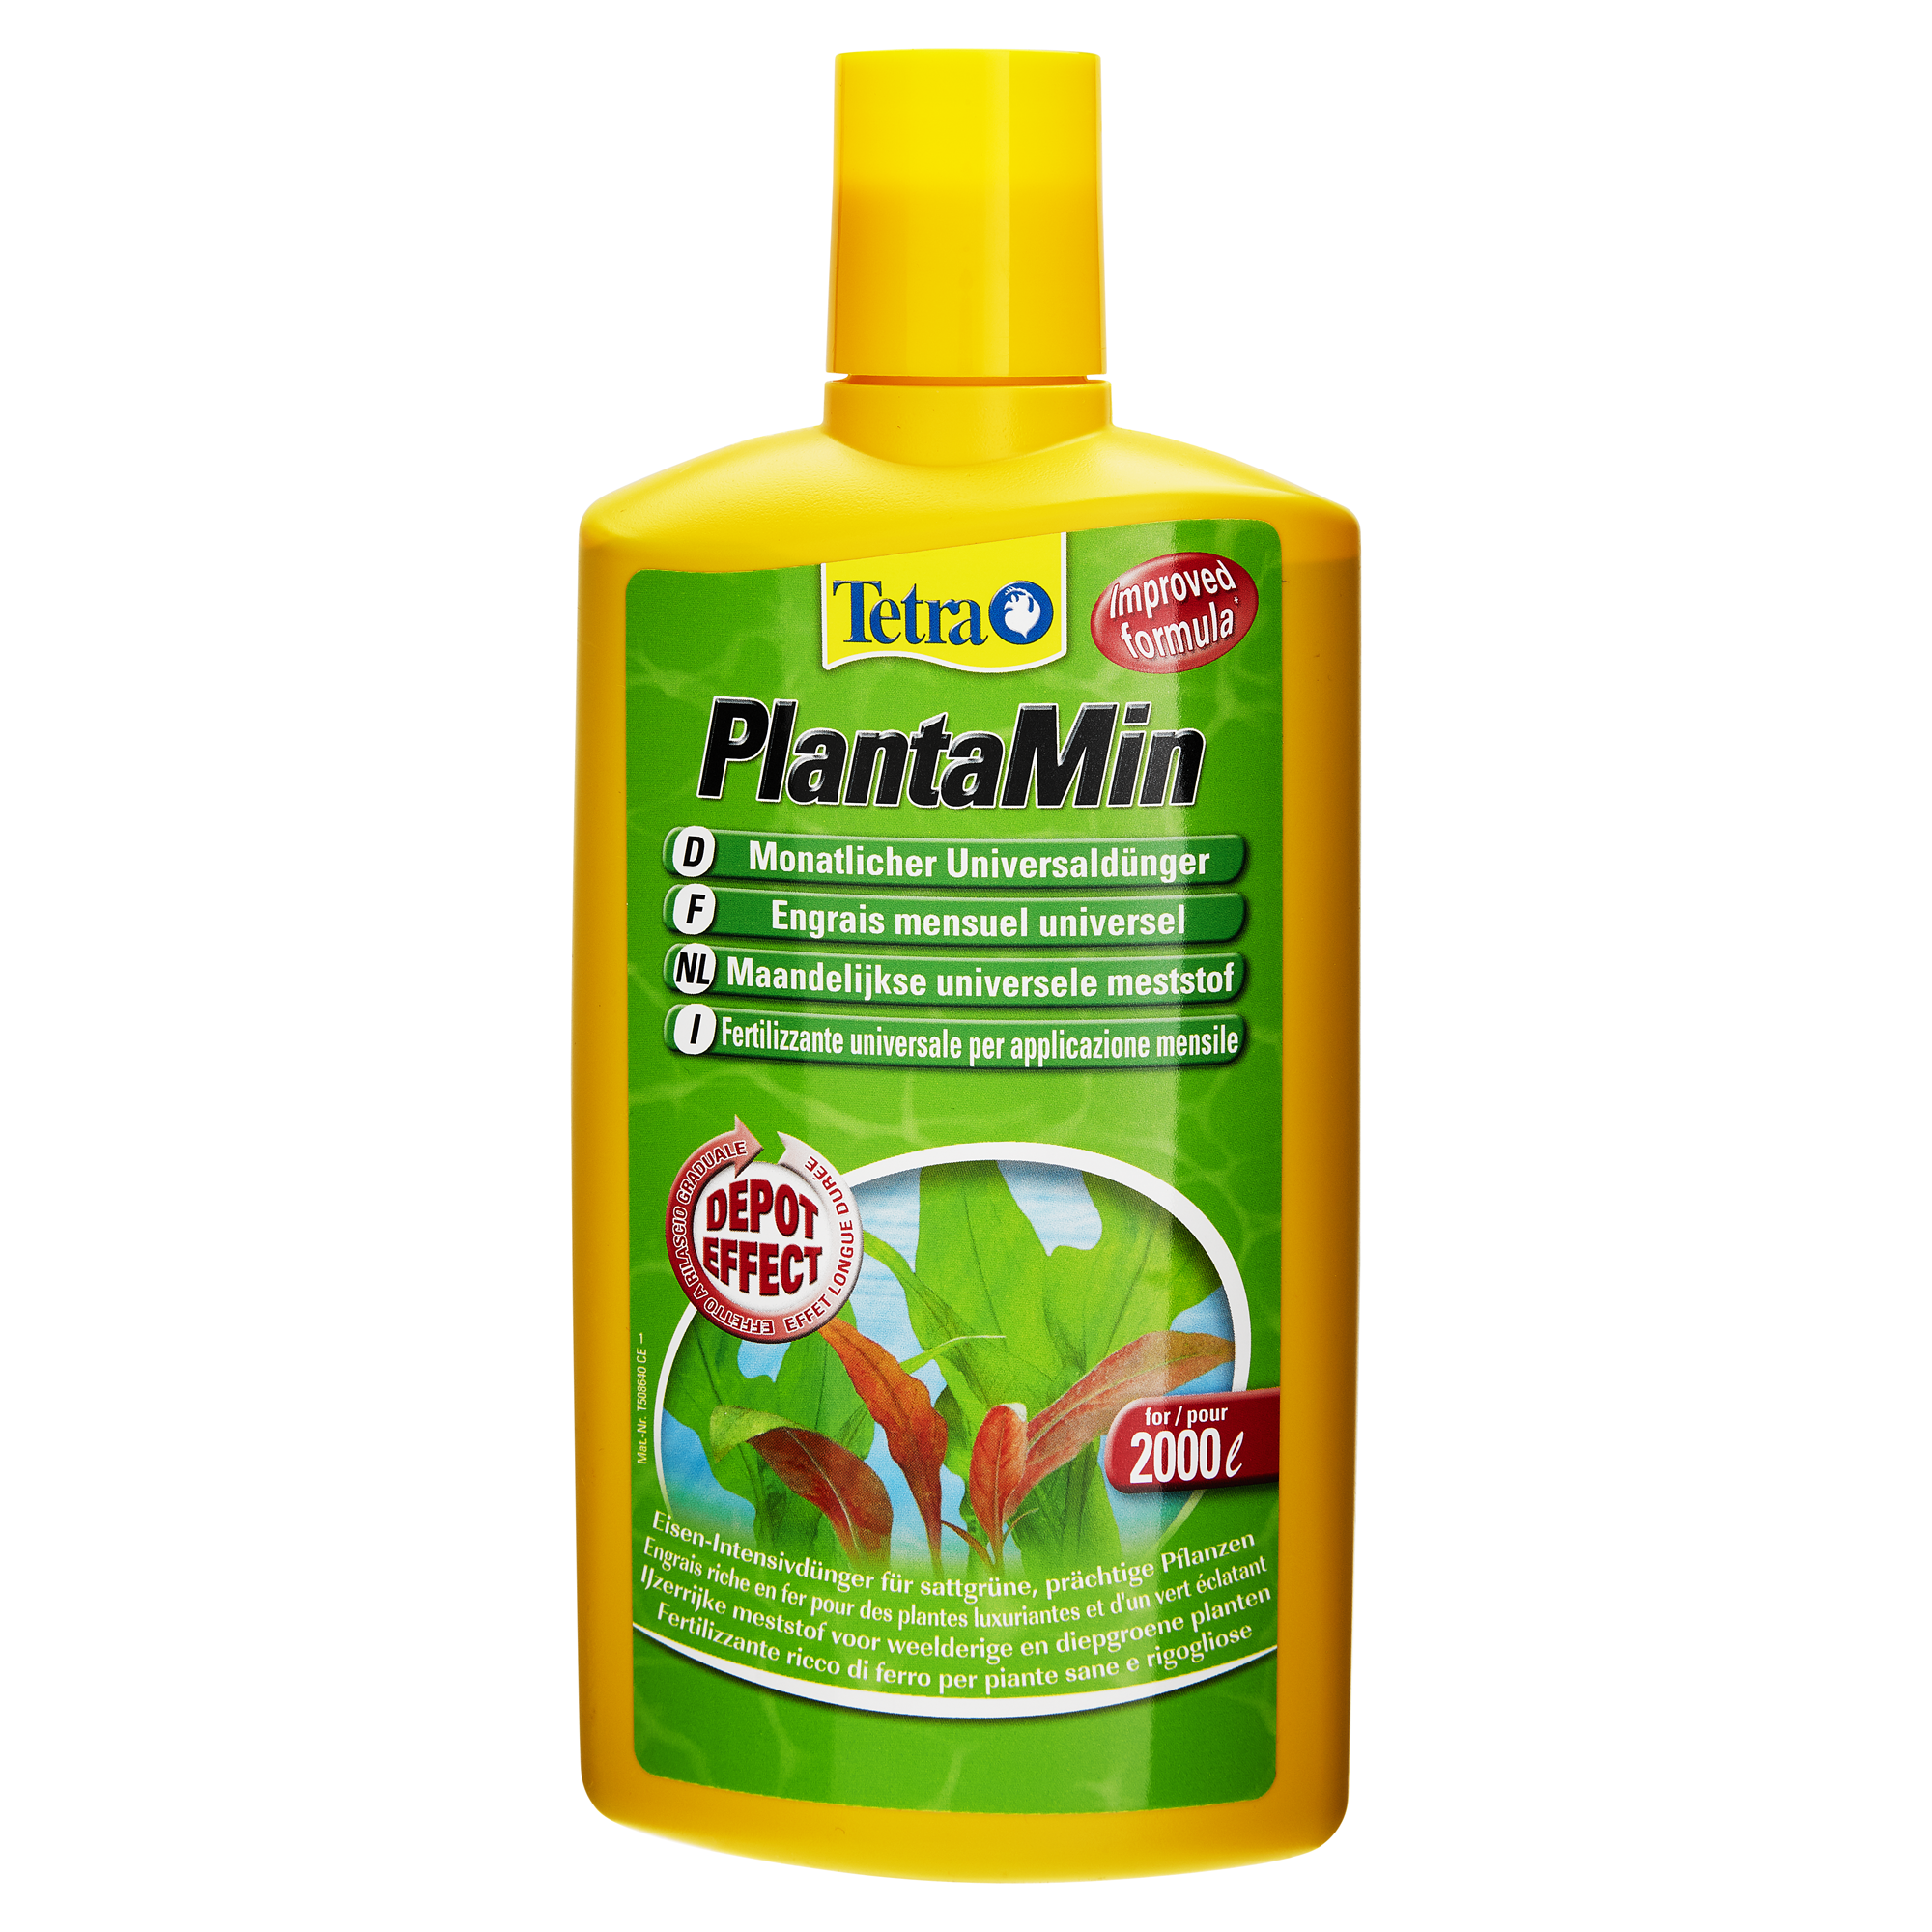 Universaldünger "PlantaMin" 500 ml + product picture